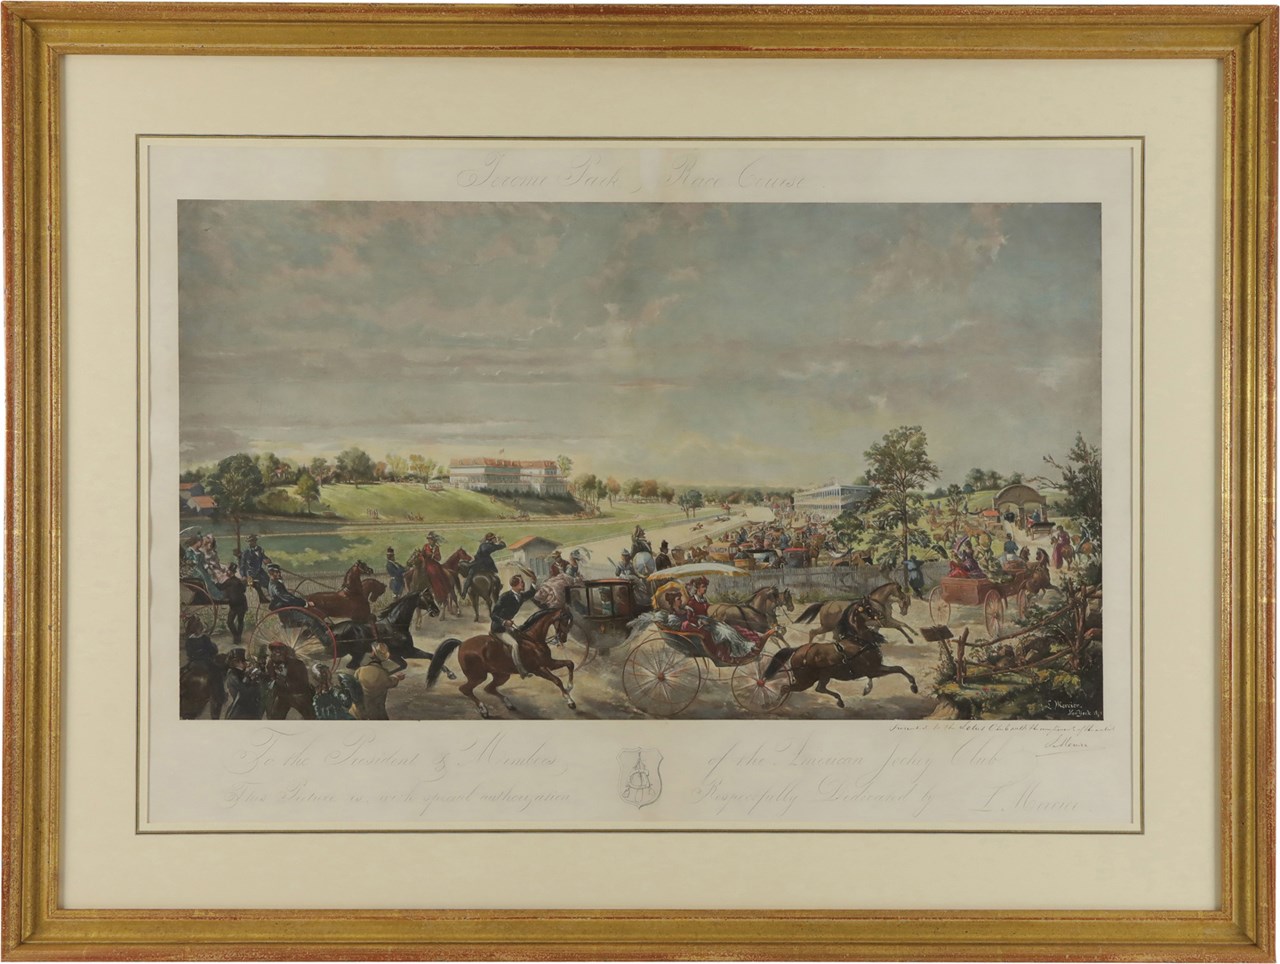 Horse Racing - Large Framed Color Print of Jerome Park